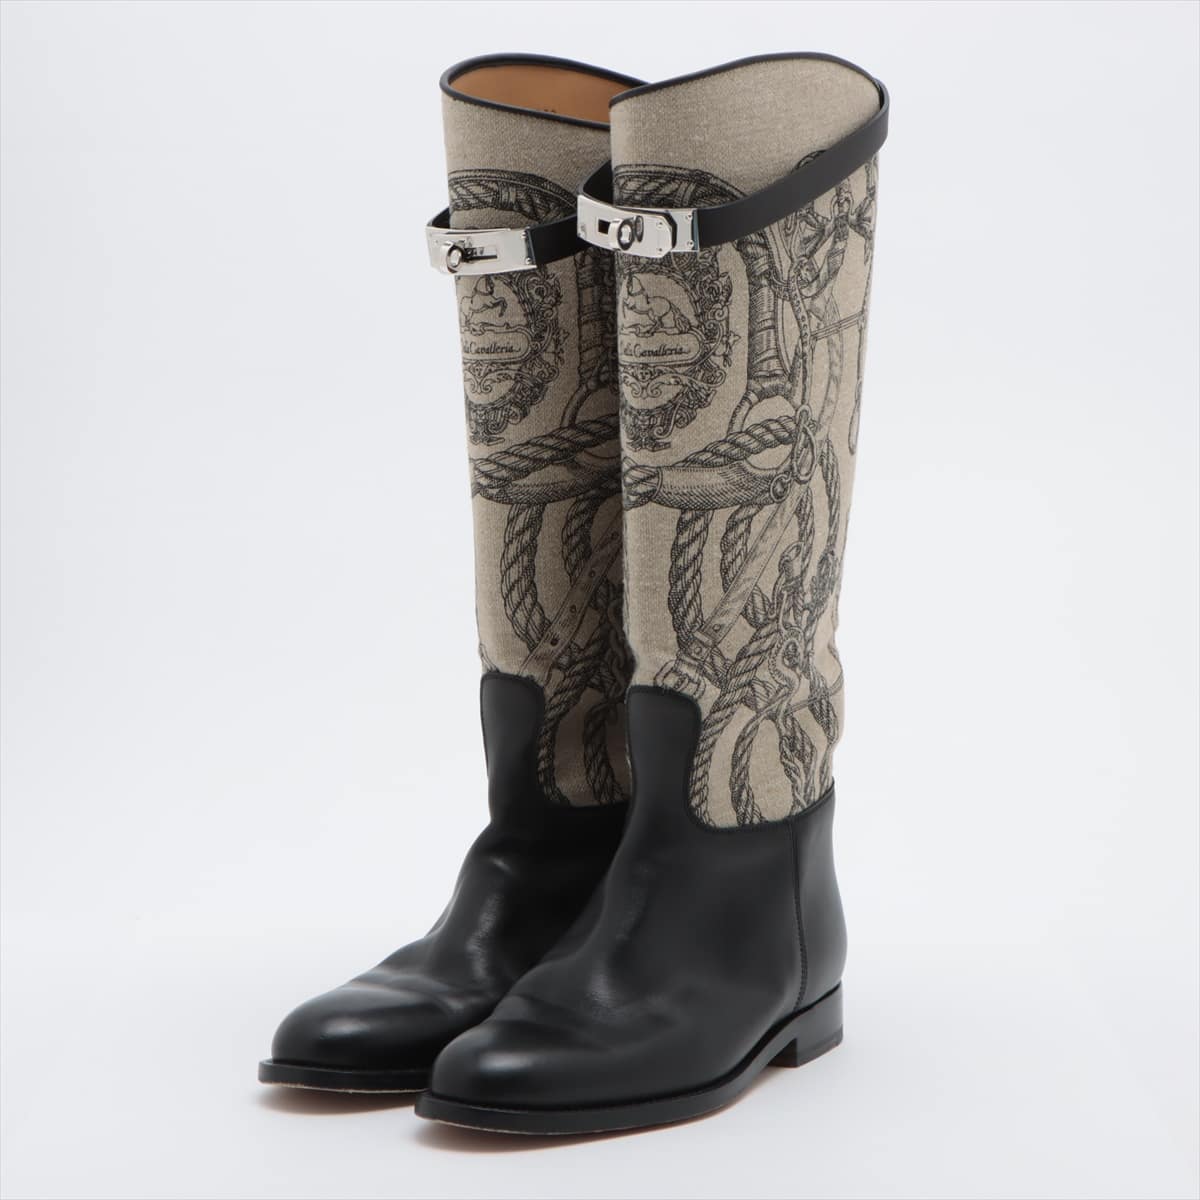 Hermès Canvas & leather Long boots 36 Ladies' black x beige Kelly metal fittings